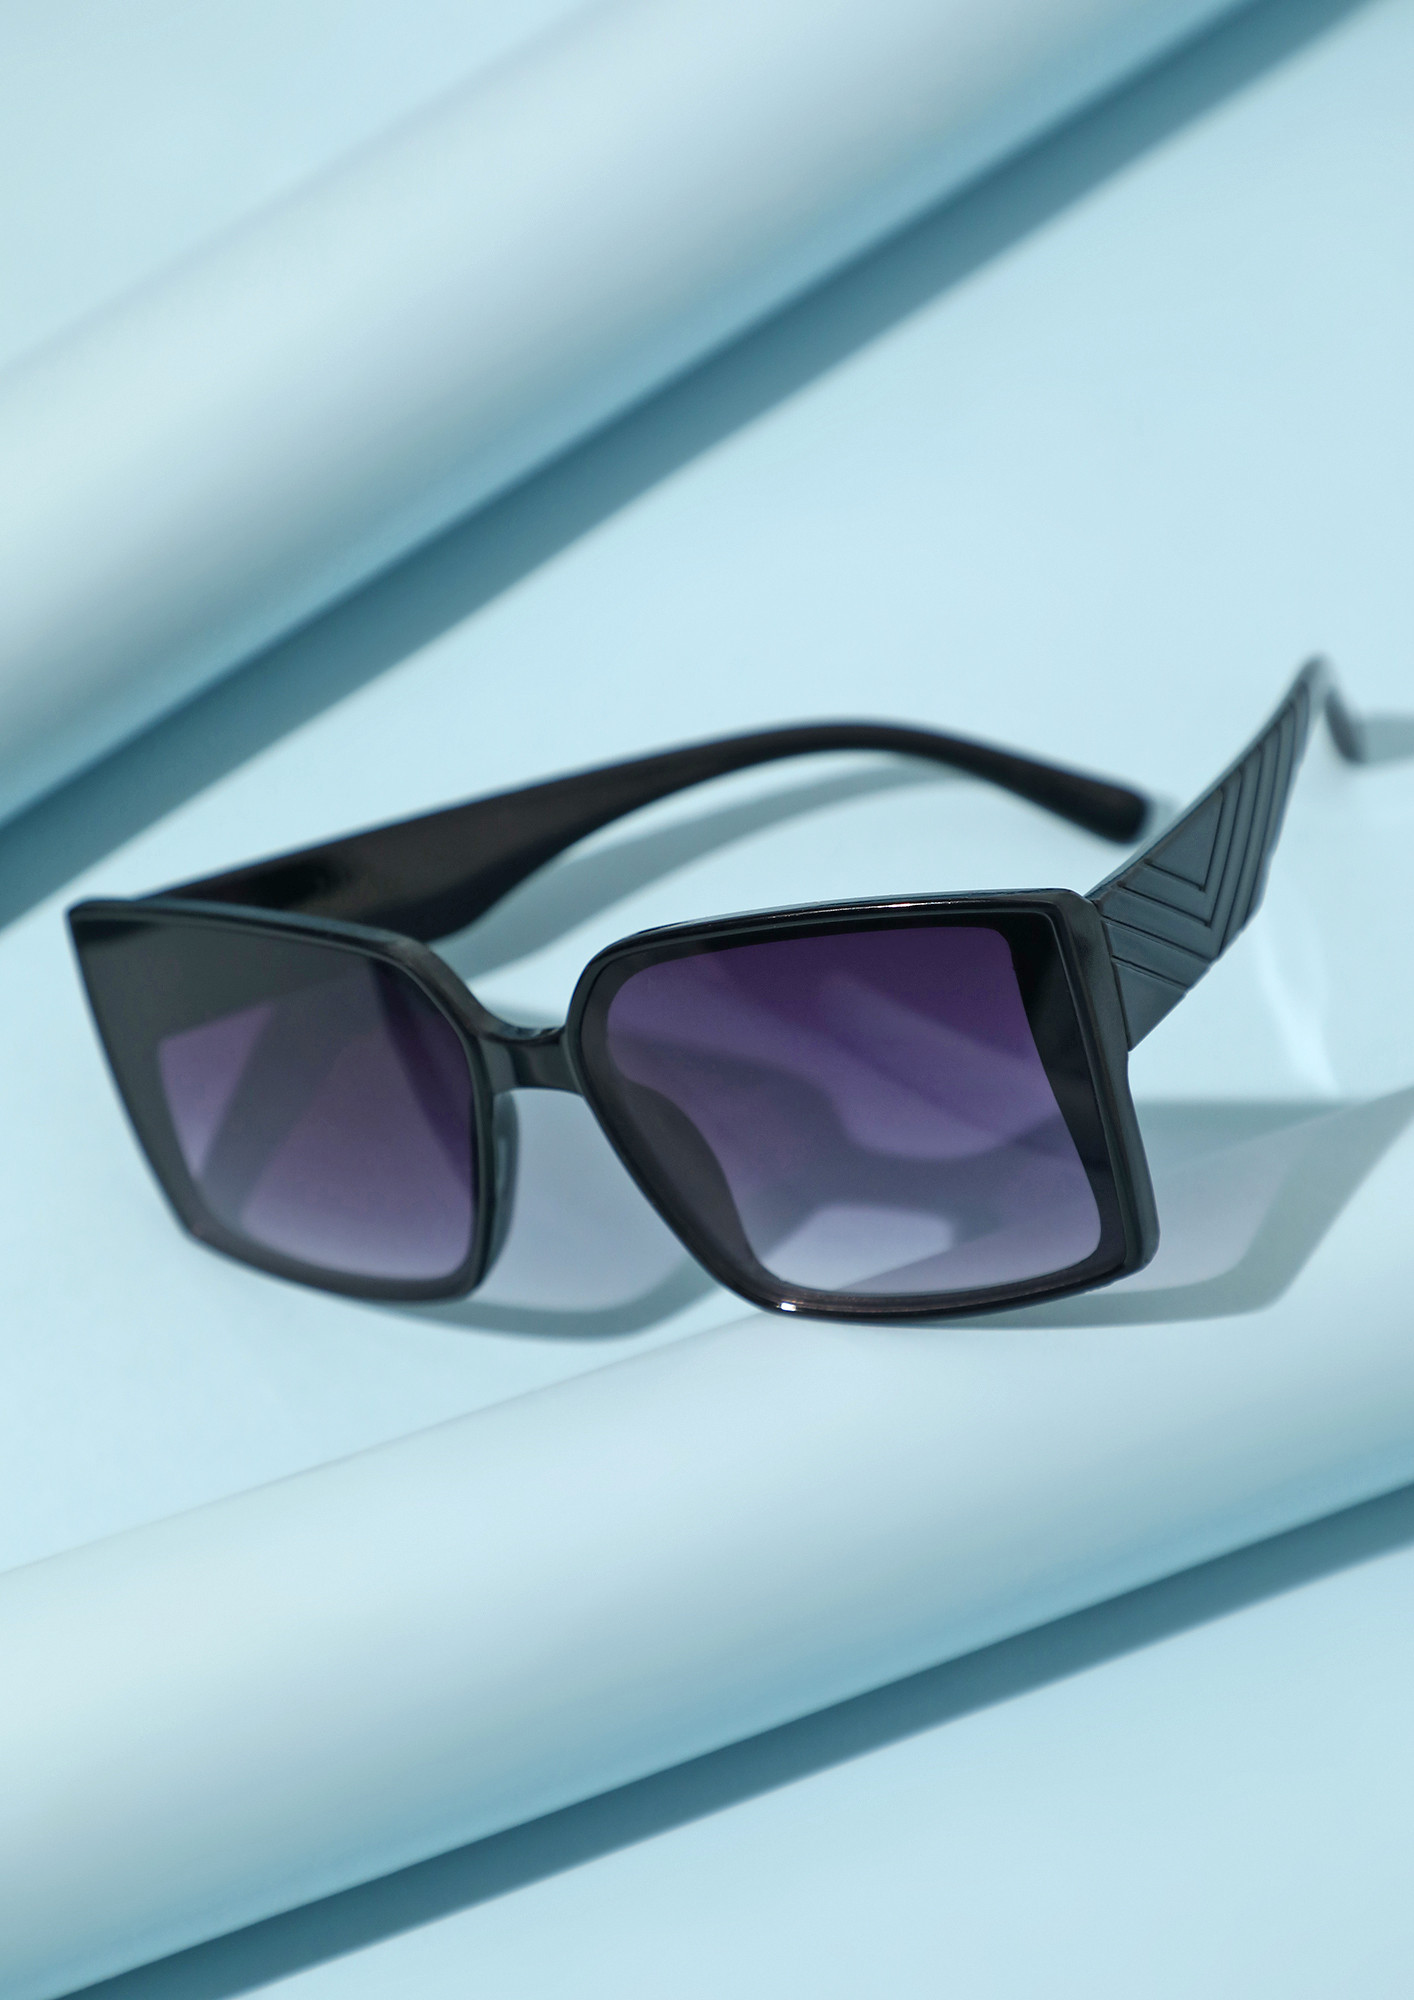 Buy Guess Sunglasses Silver Frame With Grey Lens Aviator Shape Sunglasses-GU6972  61 10D online